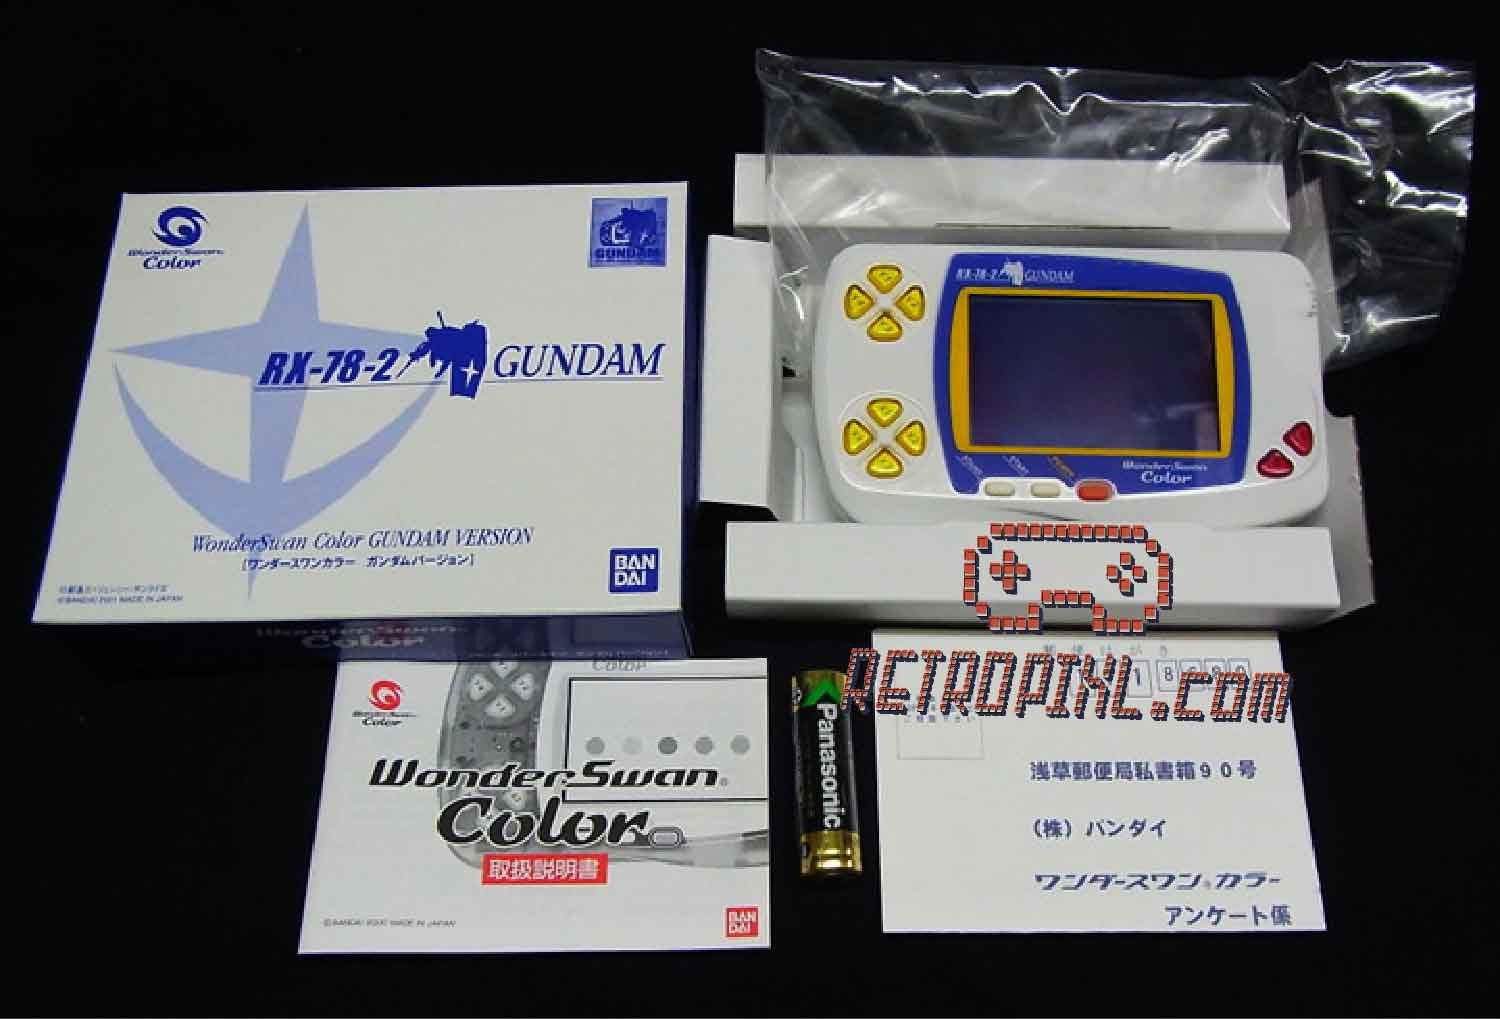 Bandai Wonderswan Color Mobile Suit Gundam RX-78-2 LIMITED EDITION